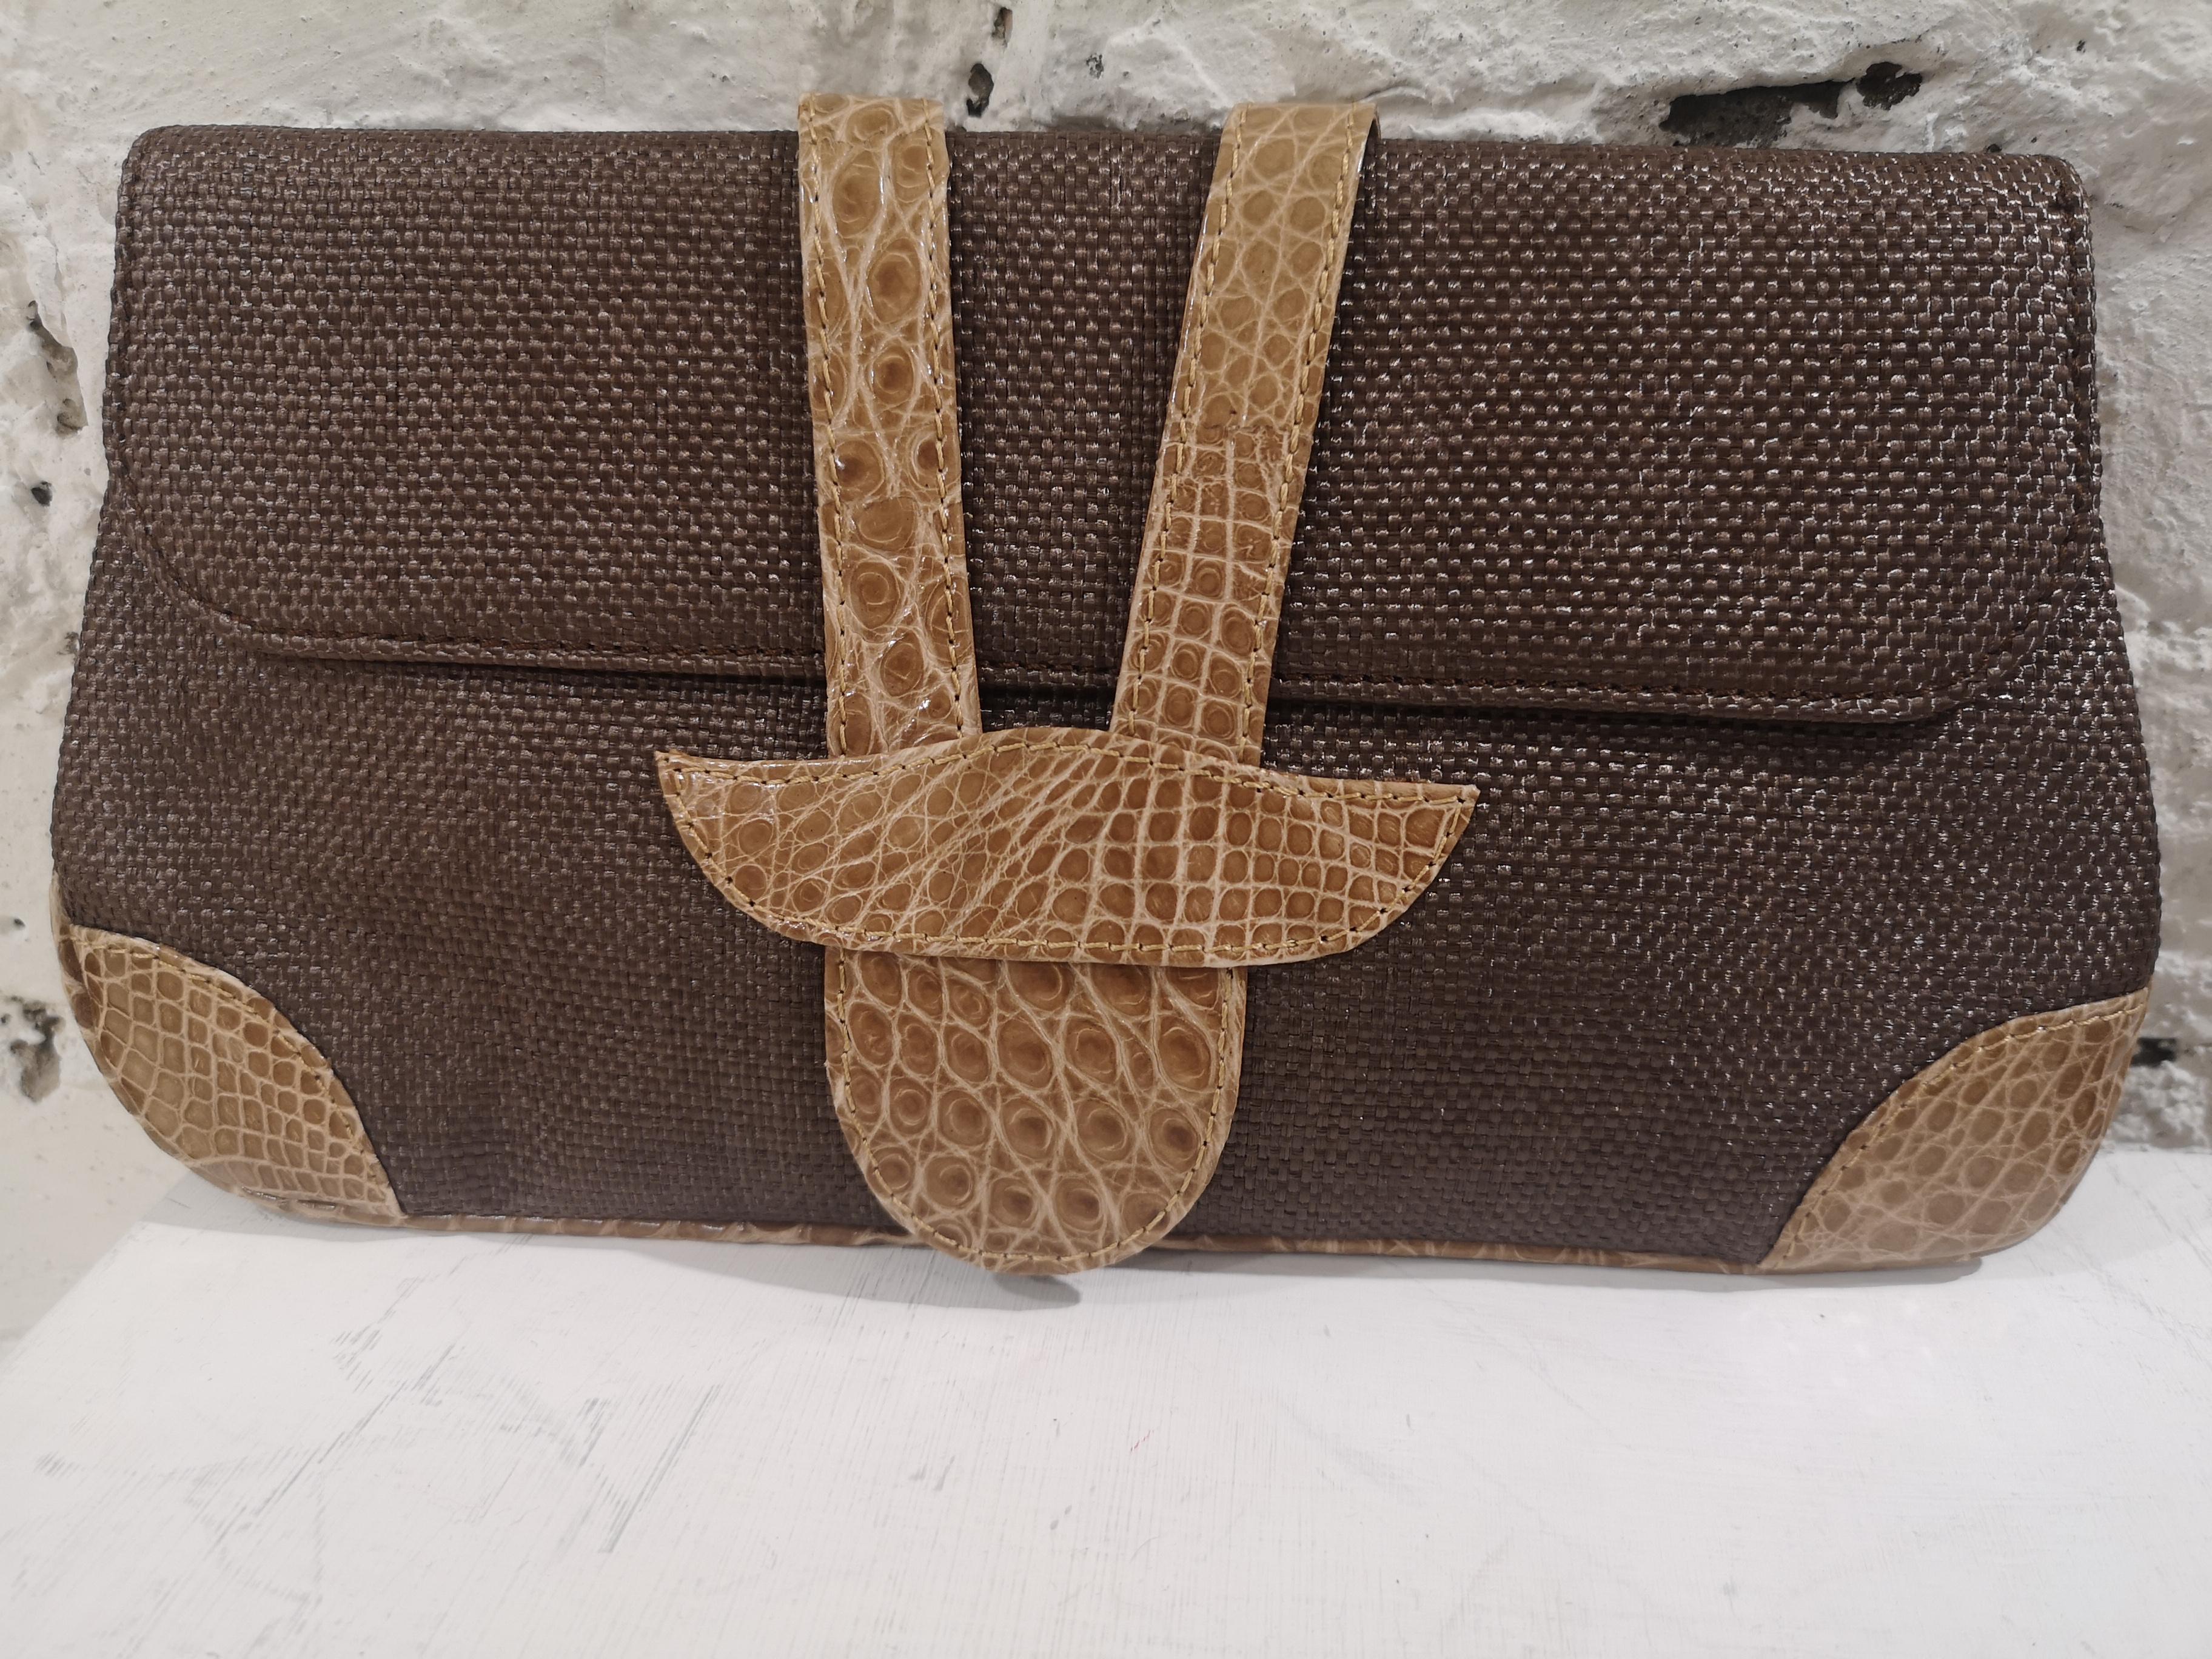 Dotti brown textile and croco print leather clutch 
measurements: 27 cm * 15 cm